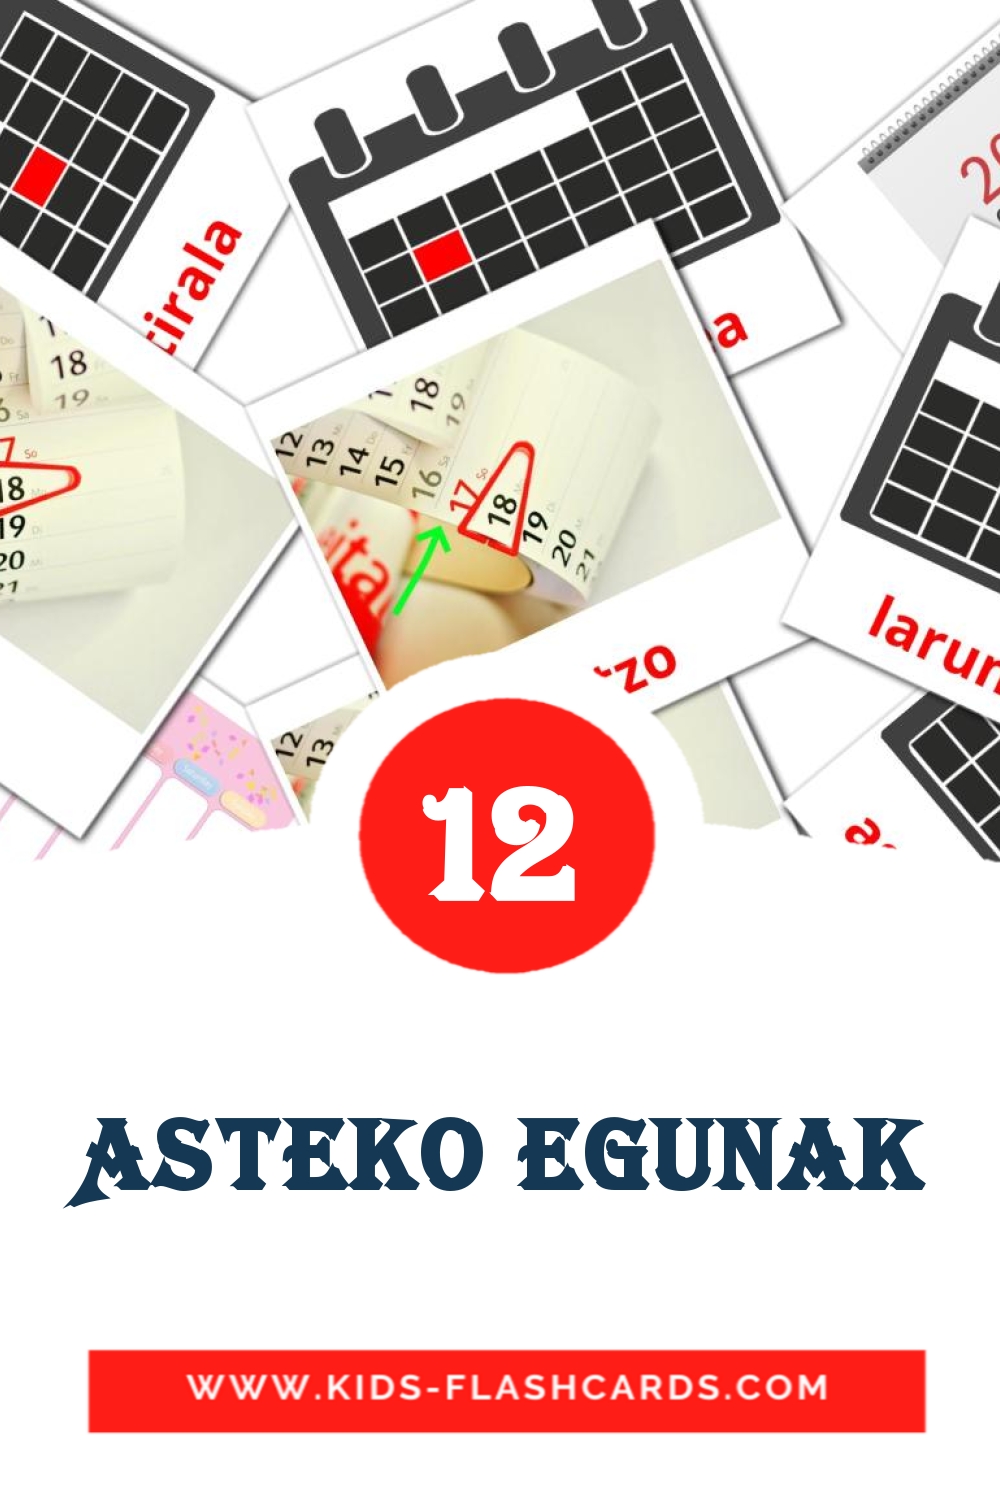 12 carte illustrate di Asteko egunak per la scuola materna in basco